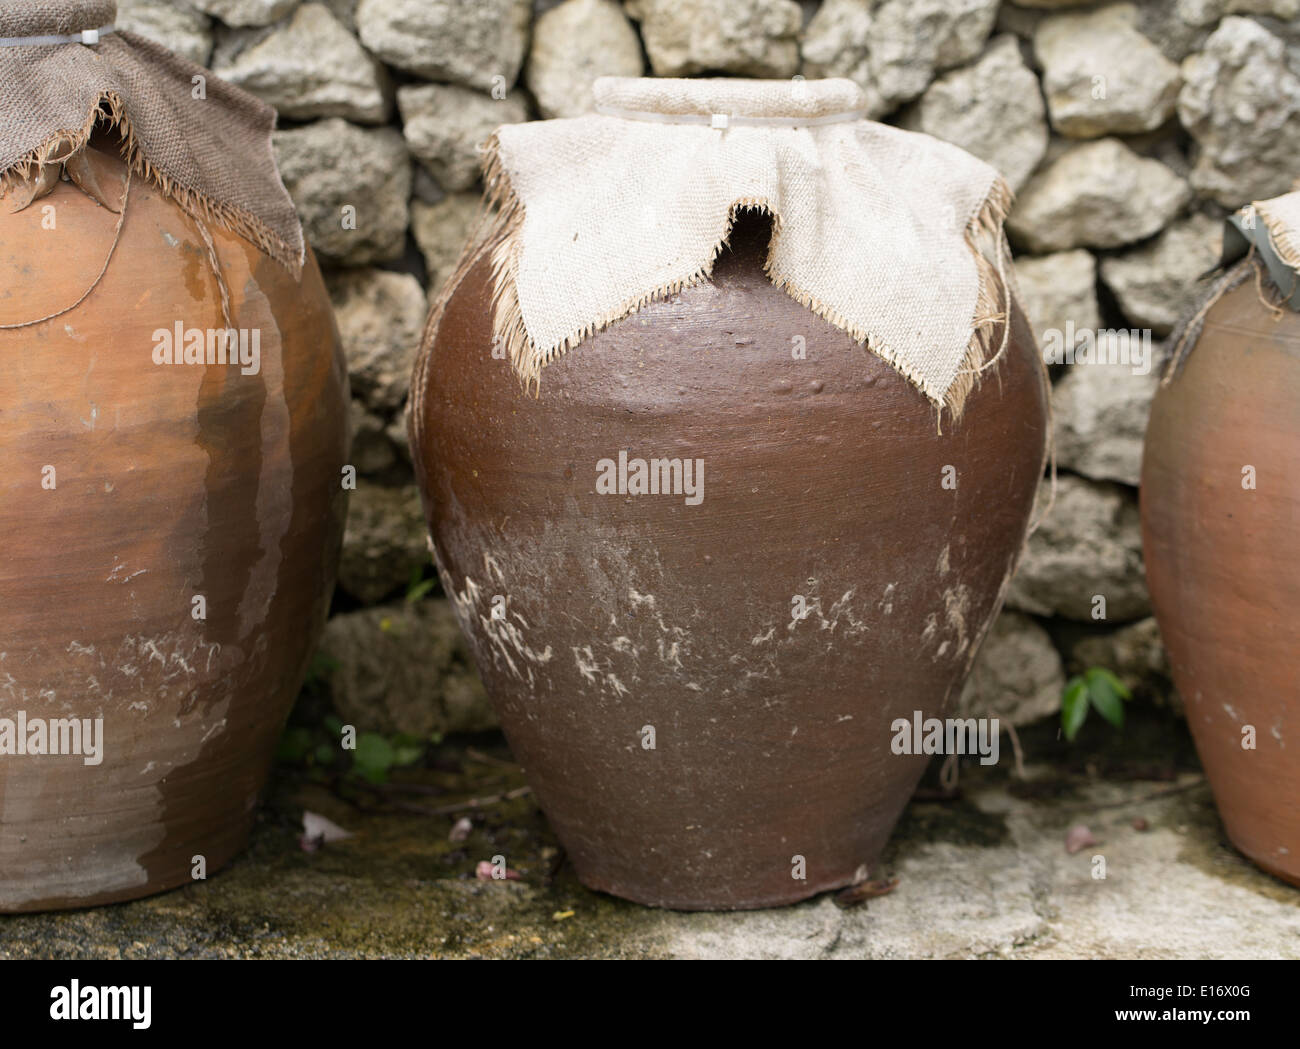 Earthenware jars used to store Awamori, Okinawan alcohol. Stock Photo